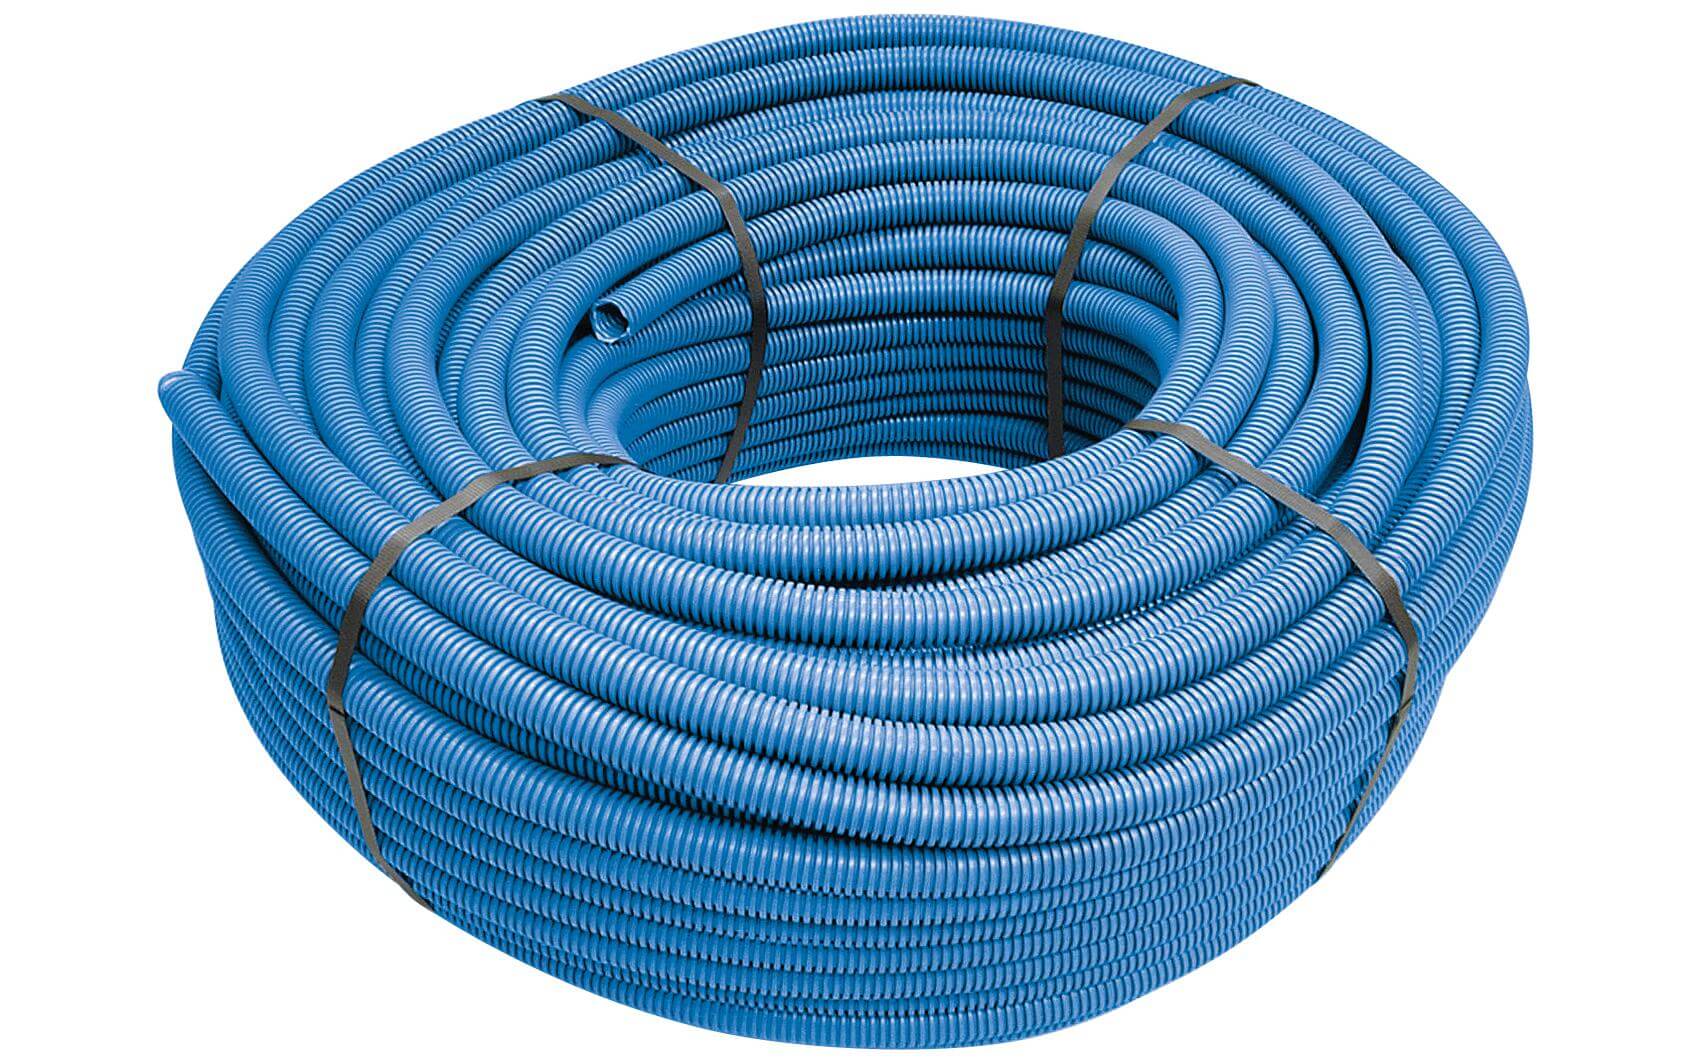 08 1520 100 Kabel-Organizer Kabel-Flexrohr Blau 1 Stück(e)